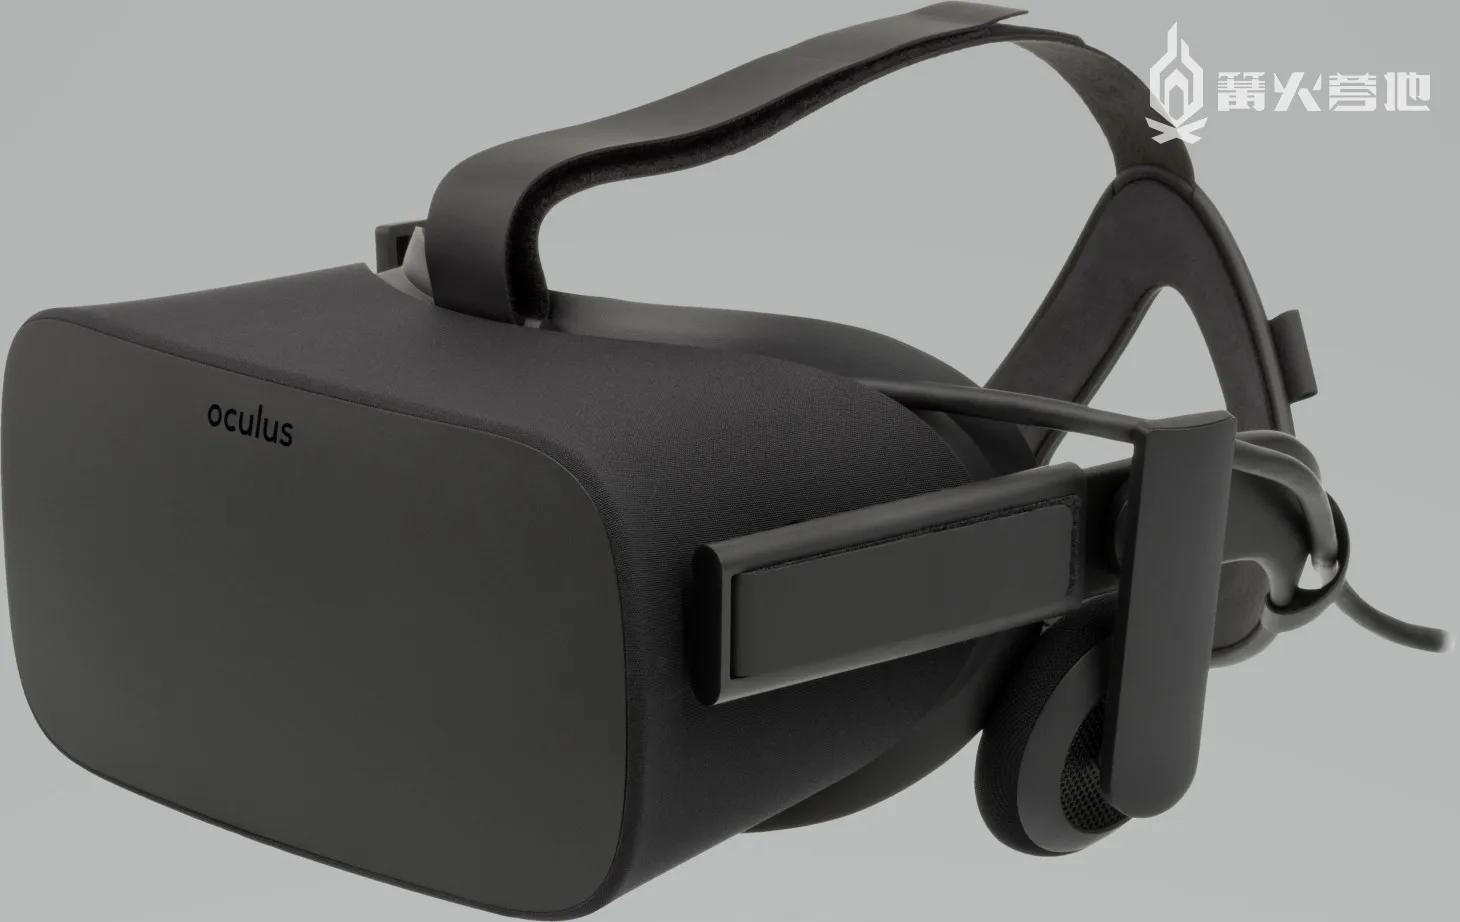 GI 特稿：給 VR 遊戲當測試員是一種怎樣的體驗